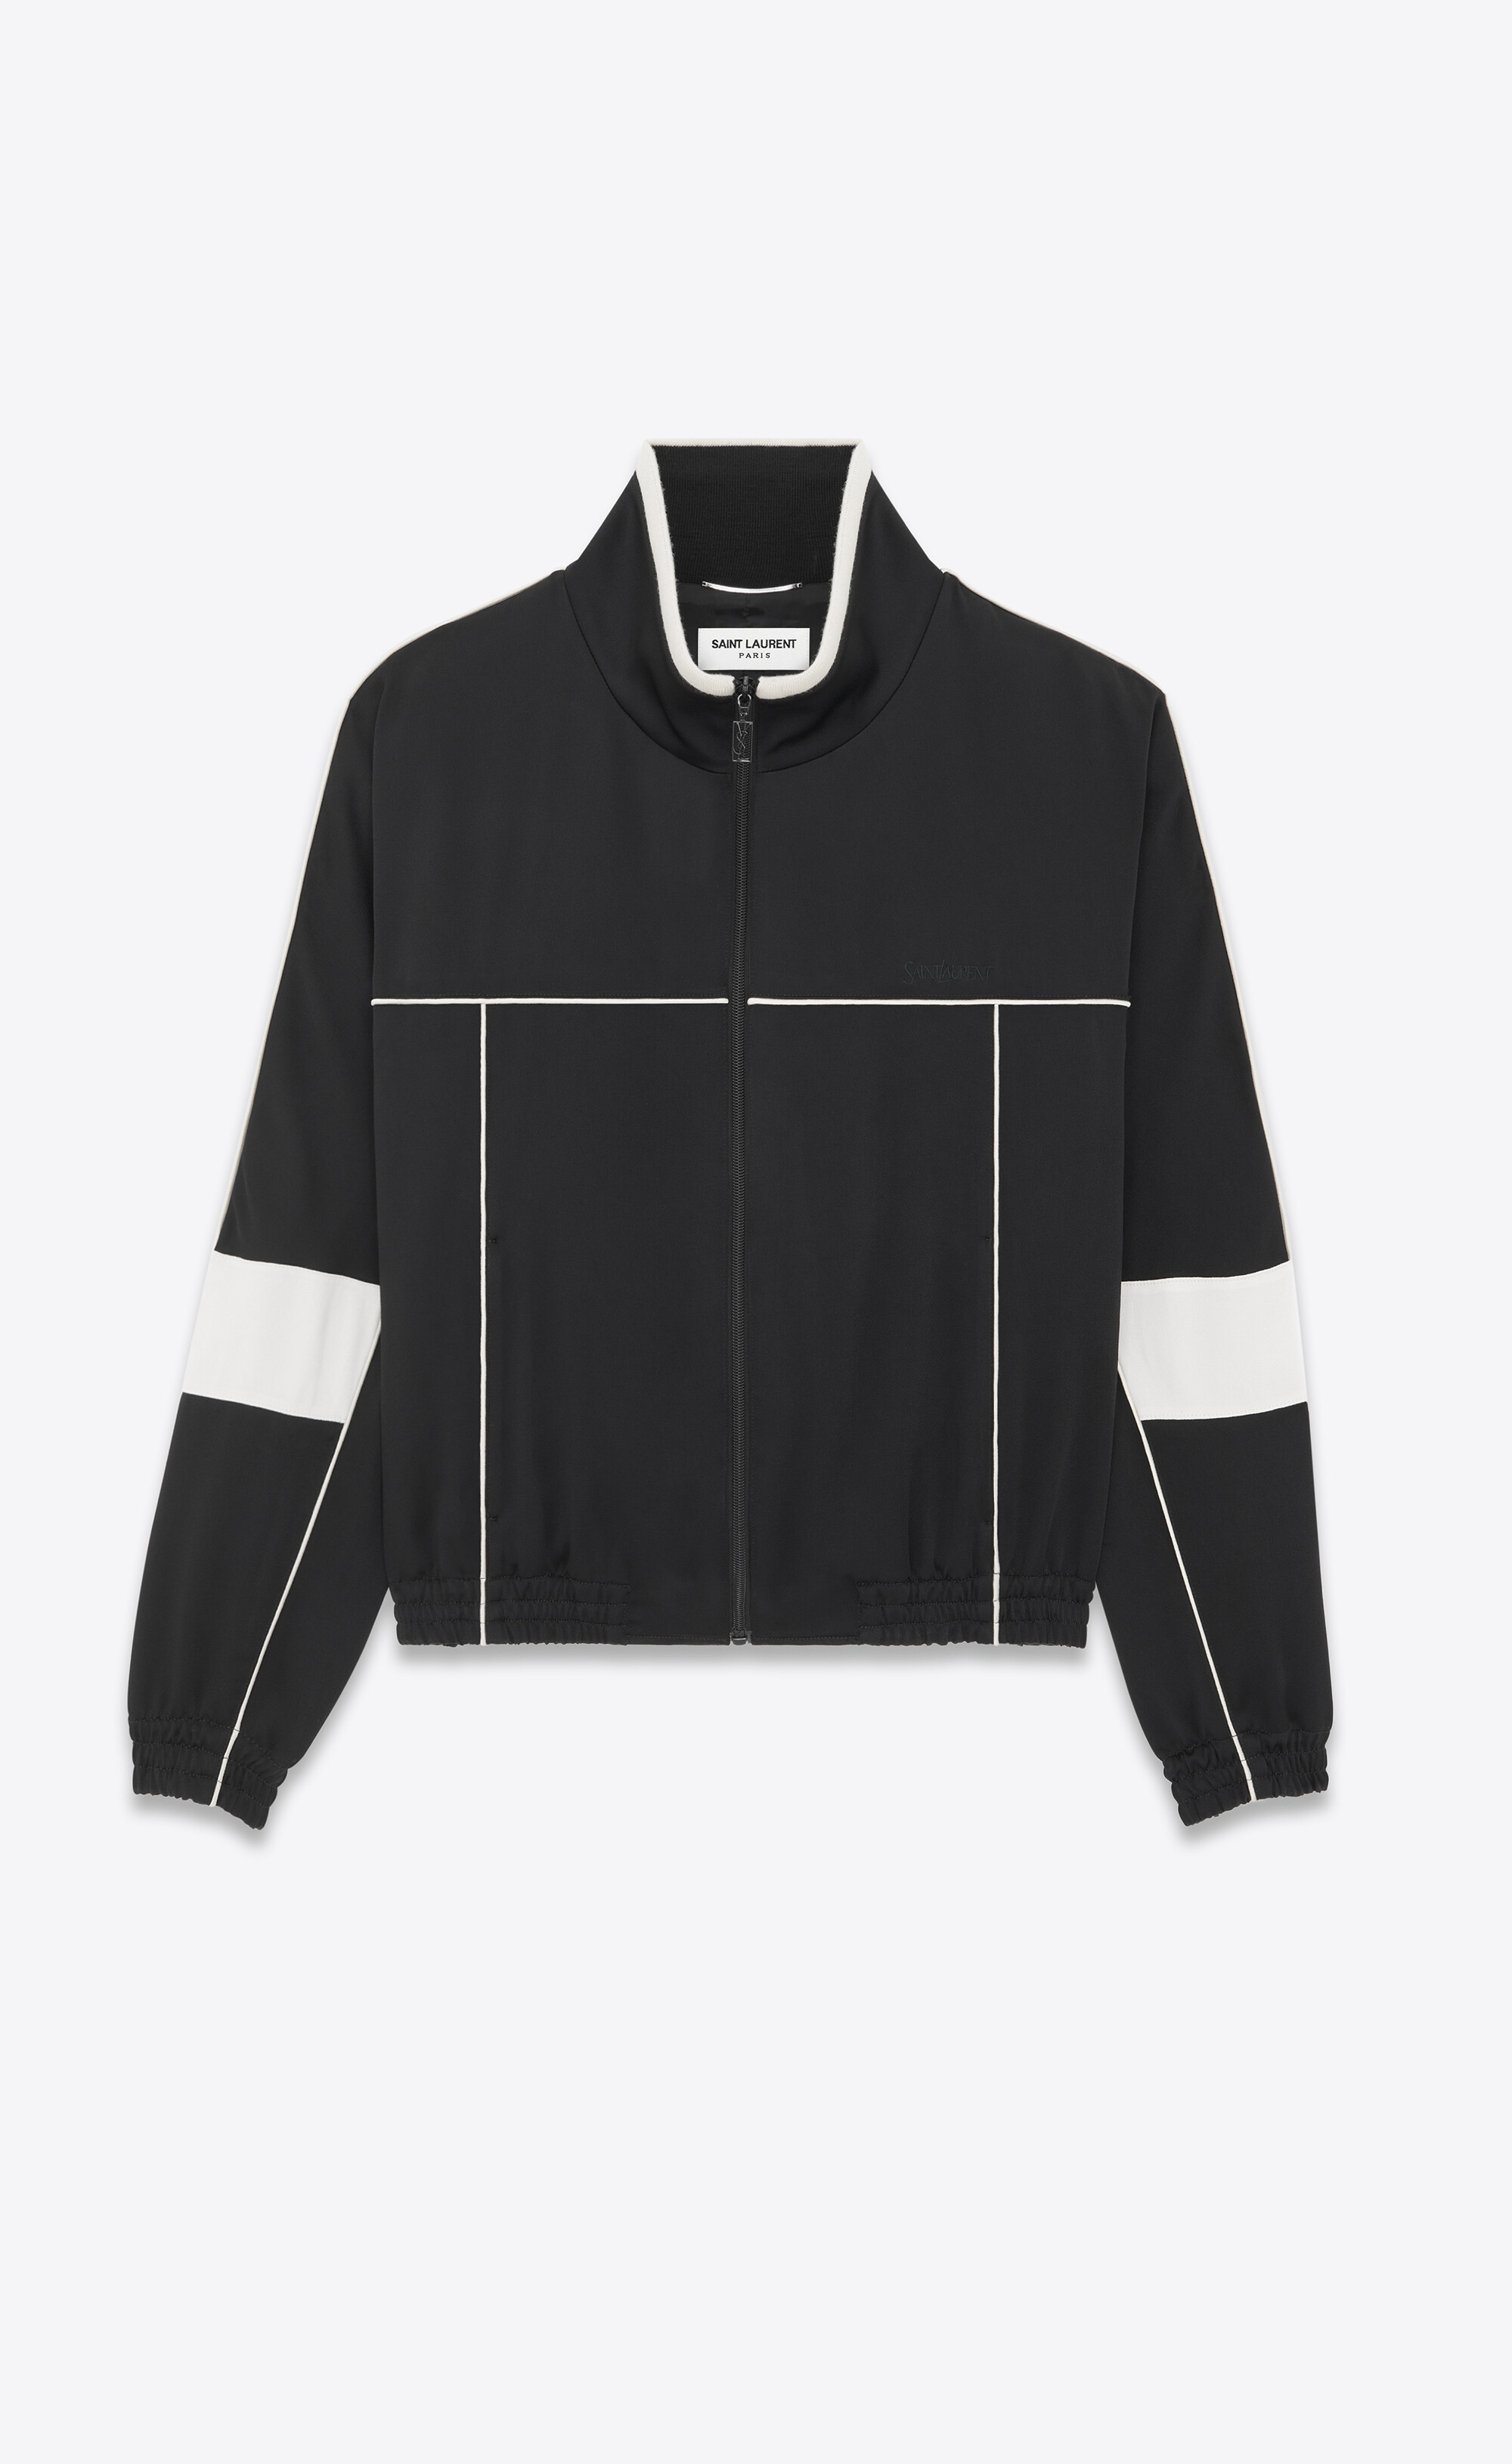 YSL SAINT LAURENT Vintage teddy varsity jacket black white leather 44 | eBay